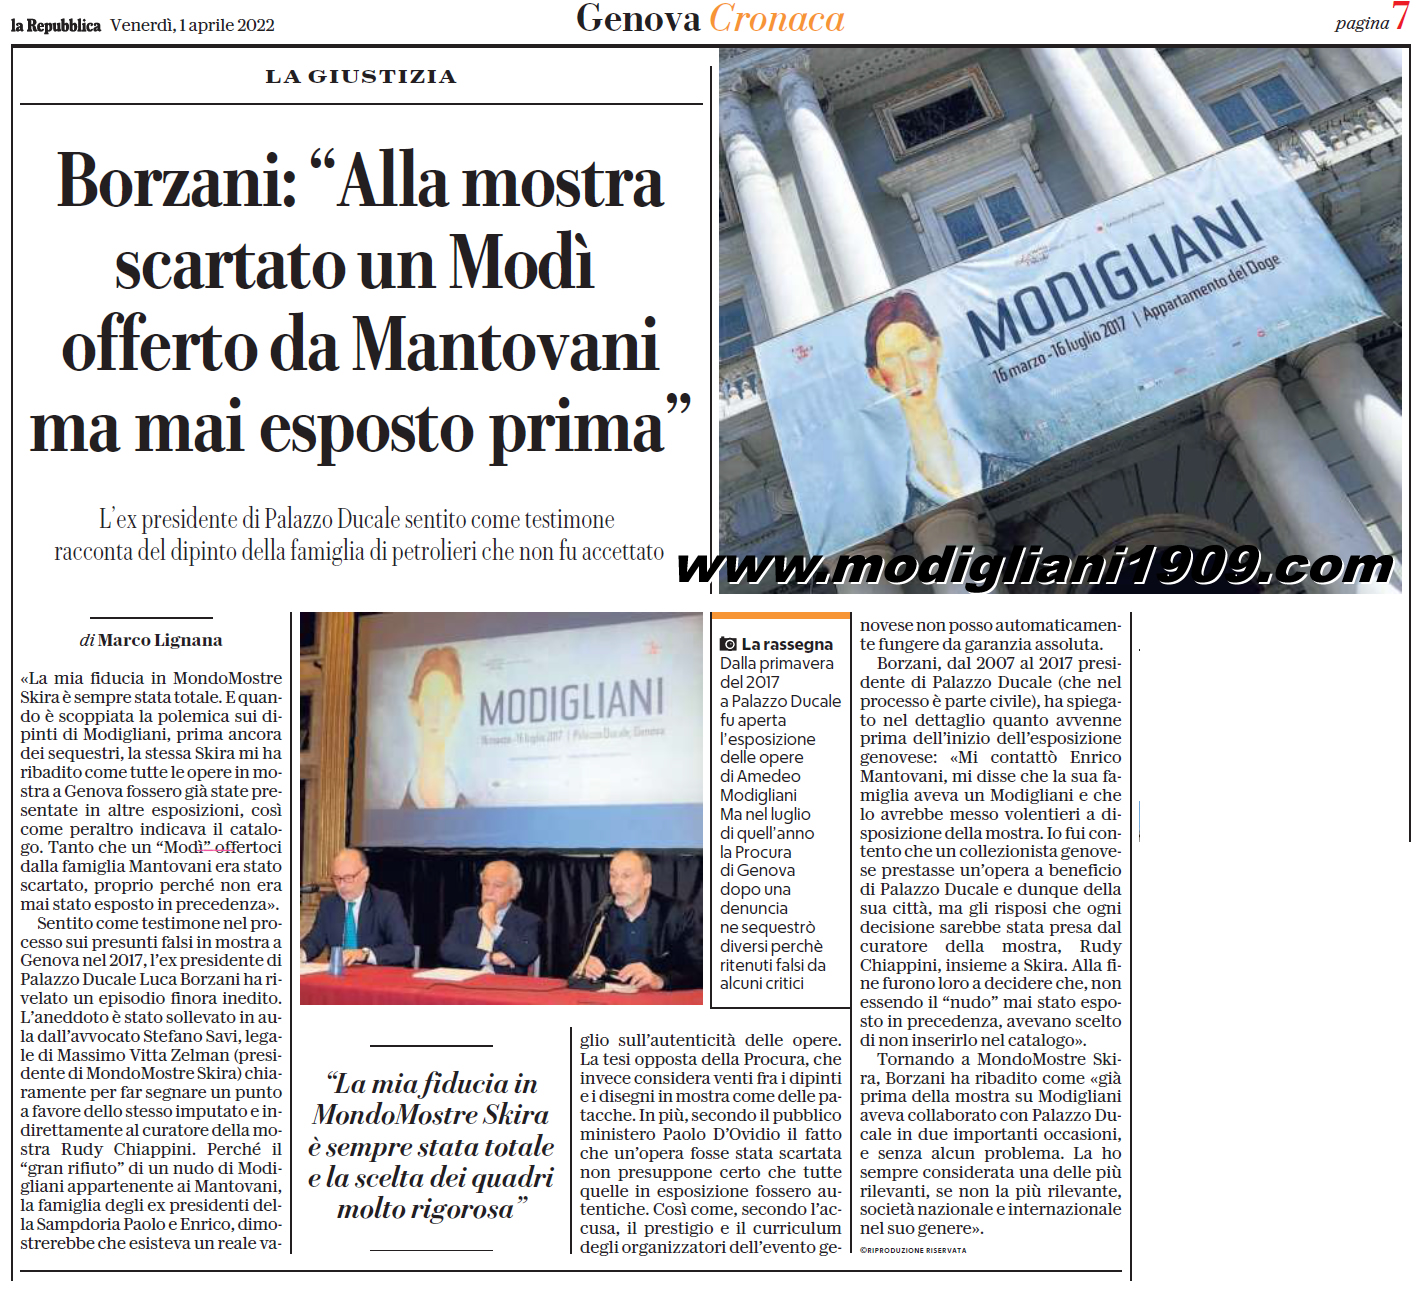 Borzani: at the Genoa exhibition a Modigliani offered by Mantovani was rejected